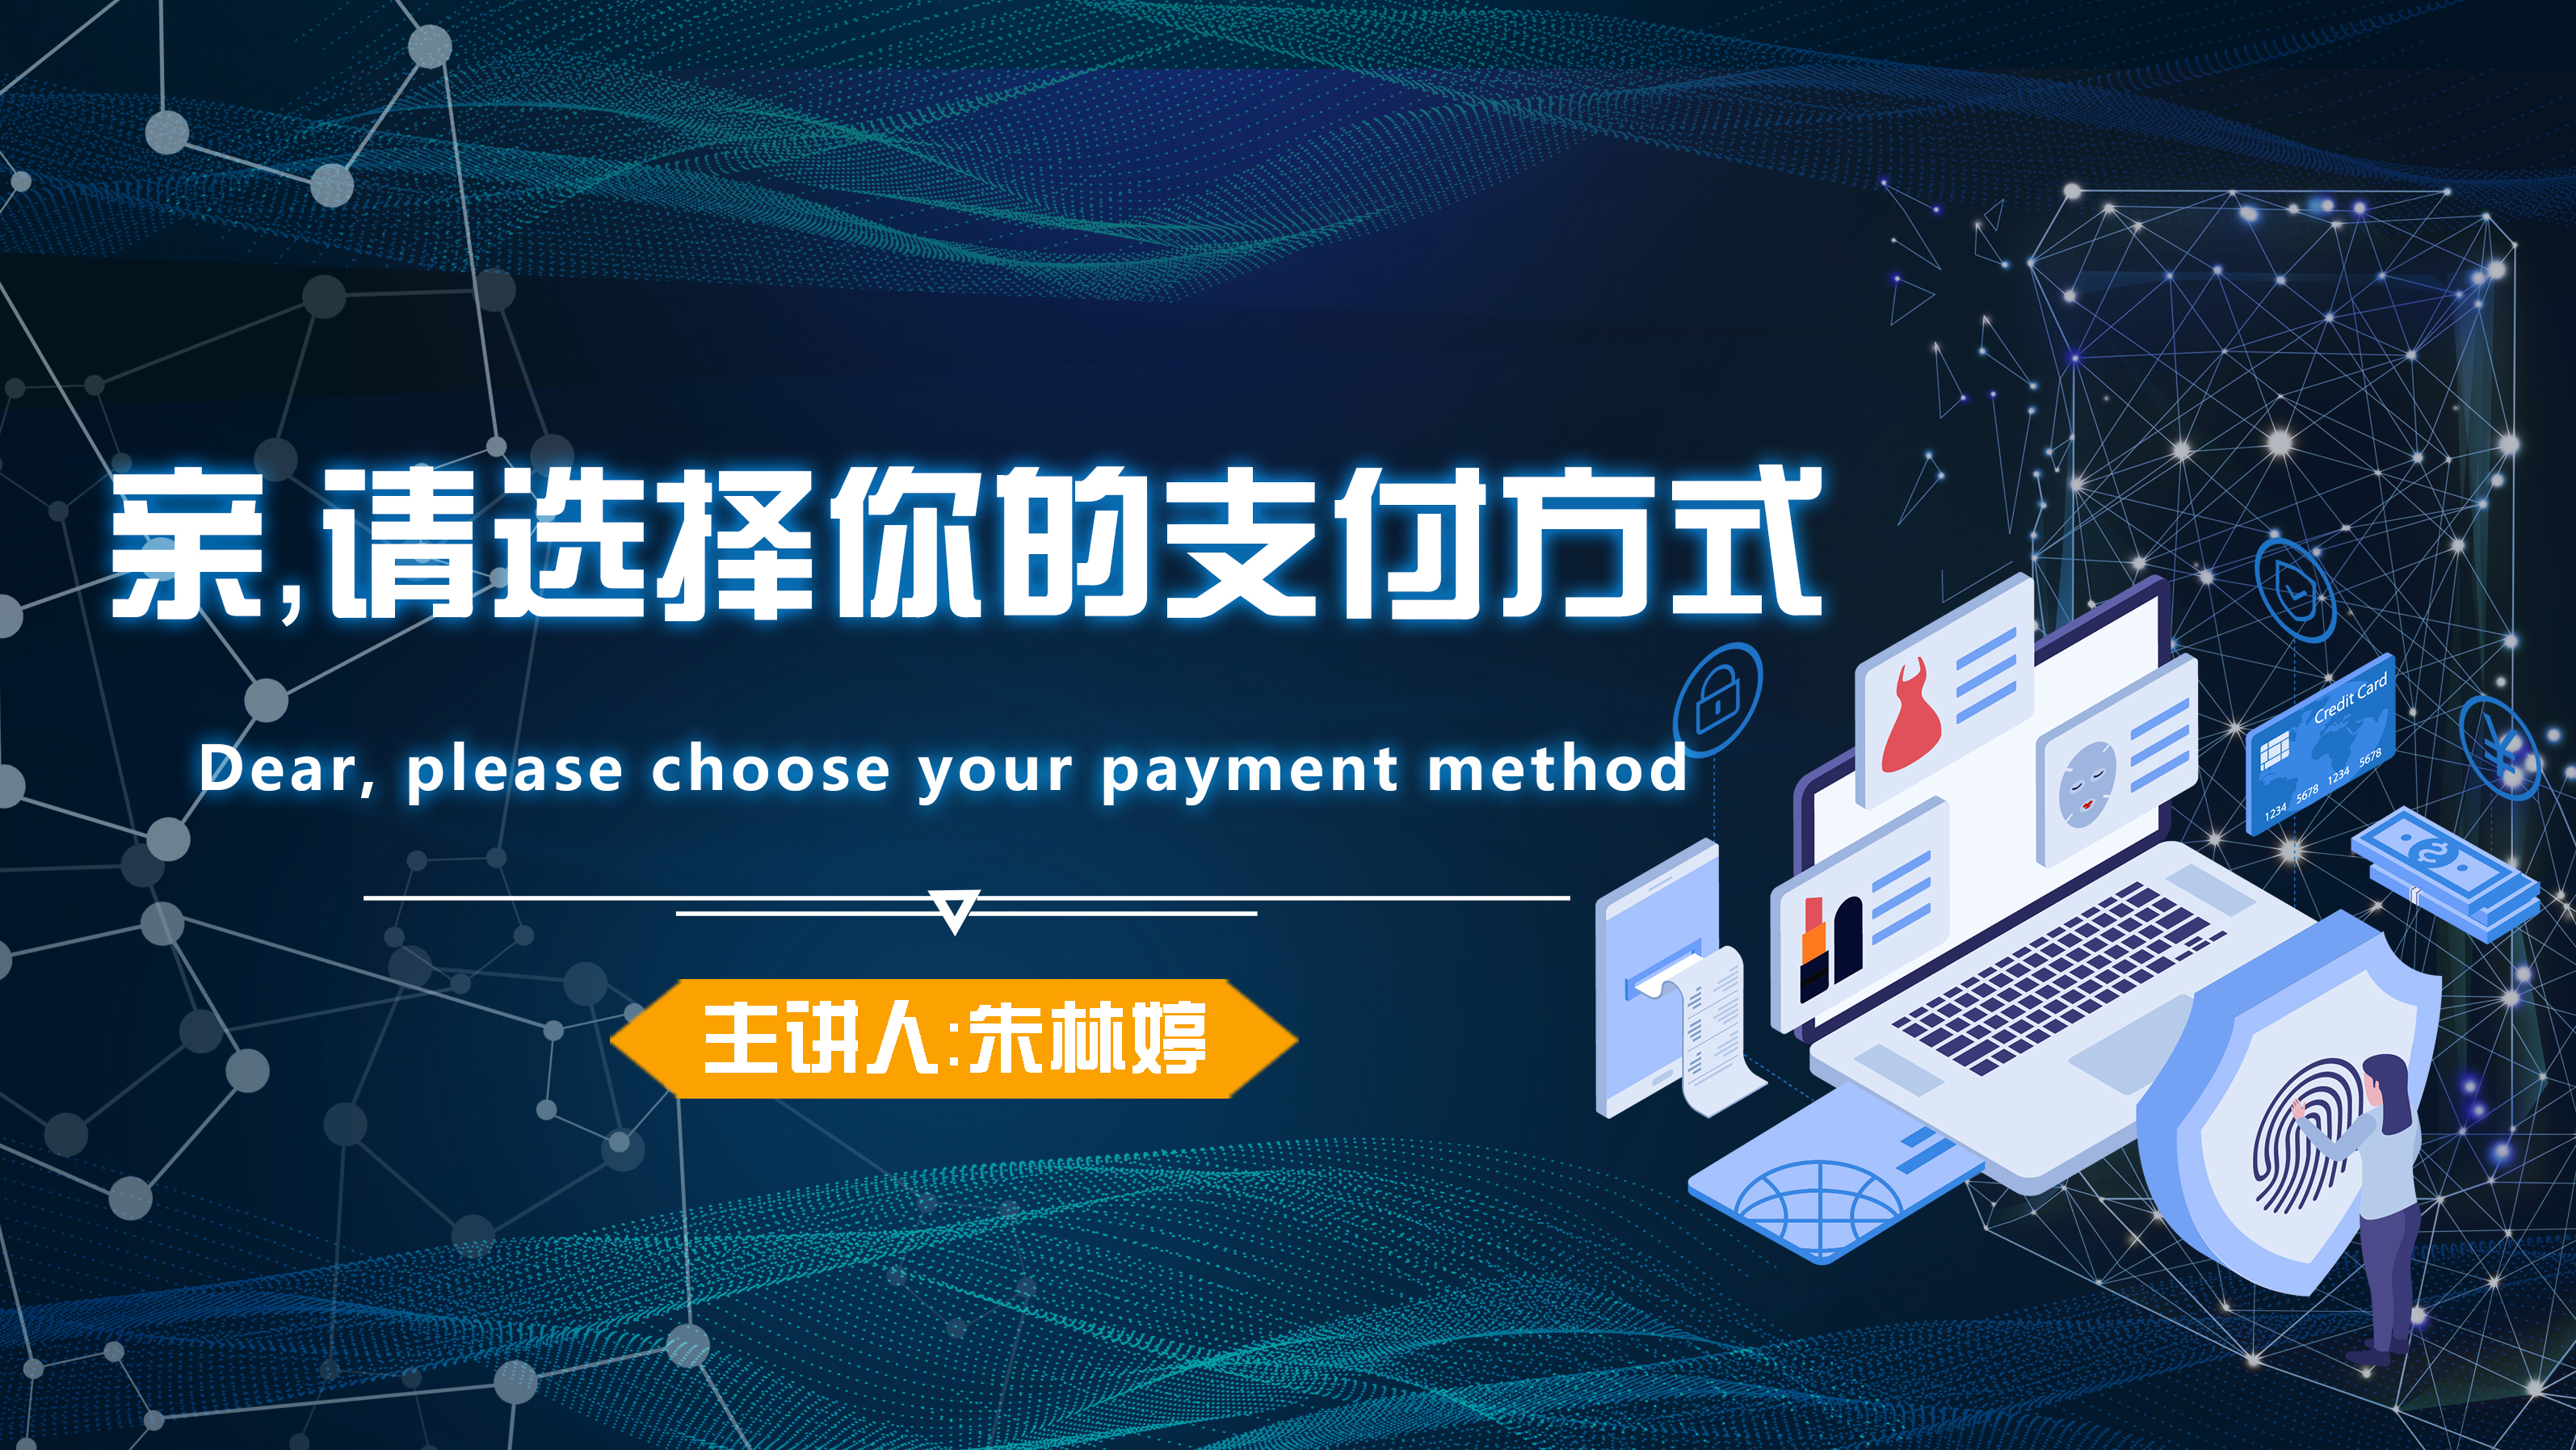 Dear, please choose your payment method